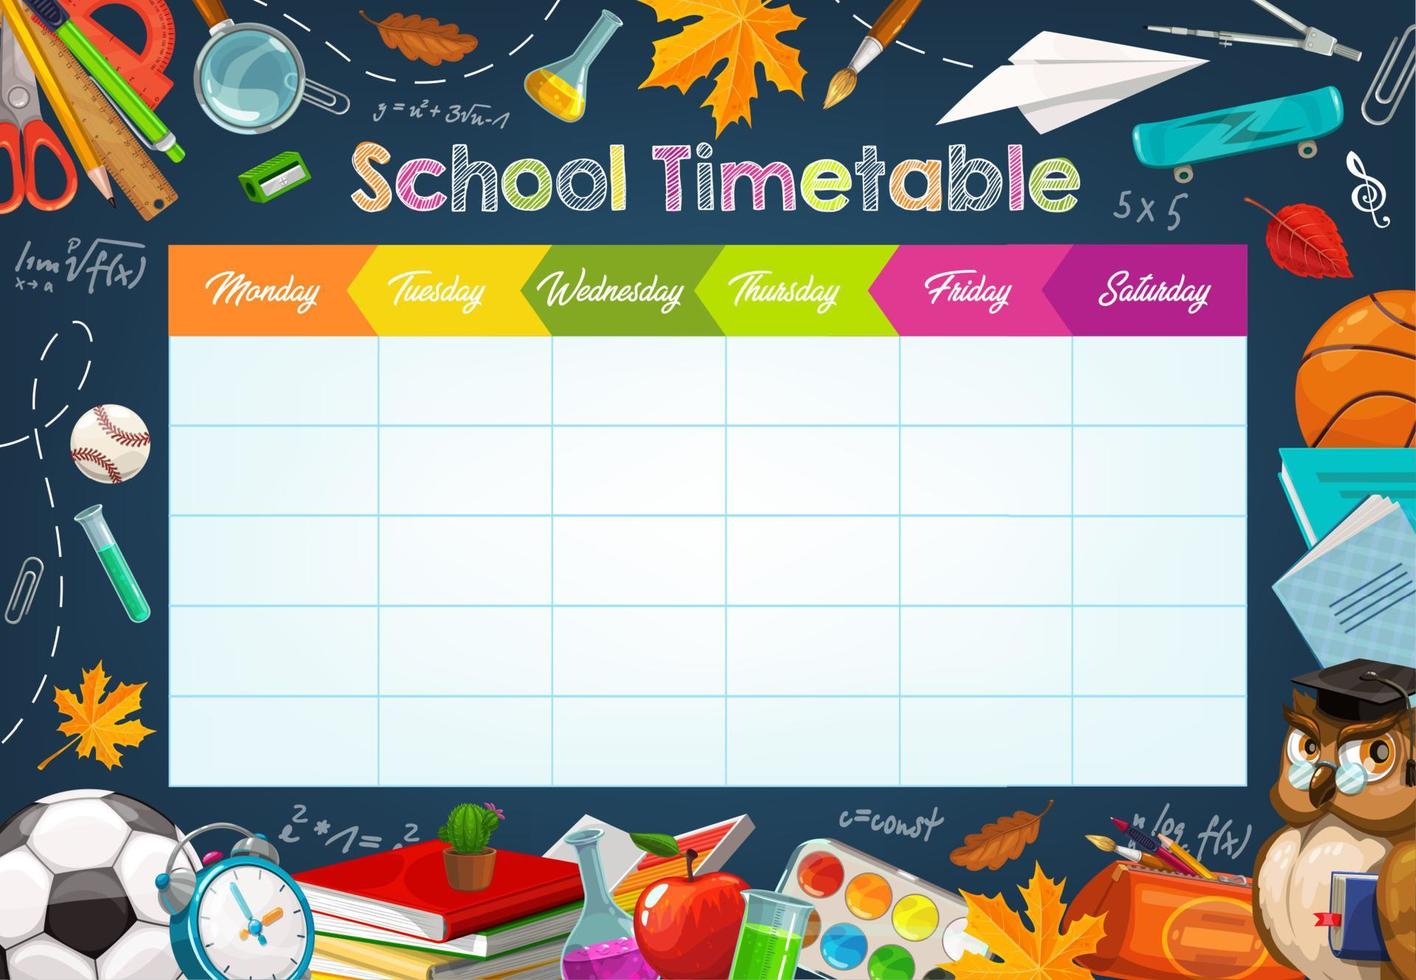 School week schedule timetable, chalk sketch vector